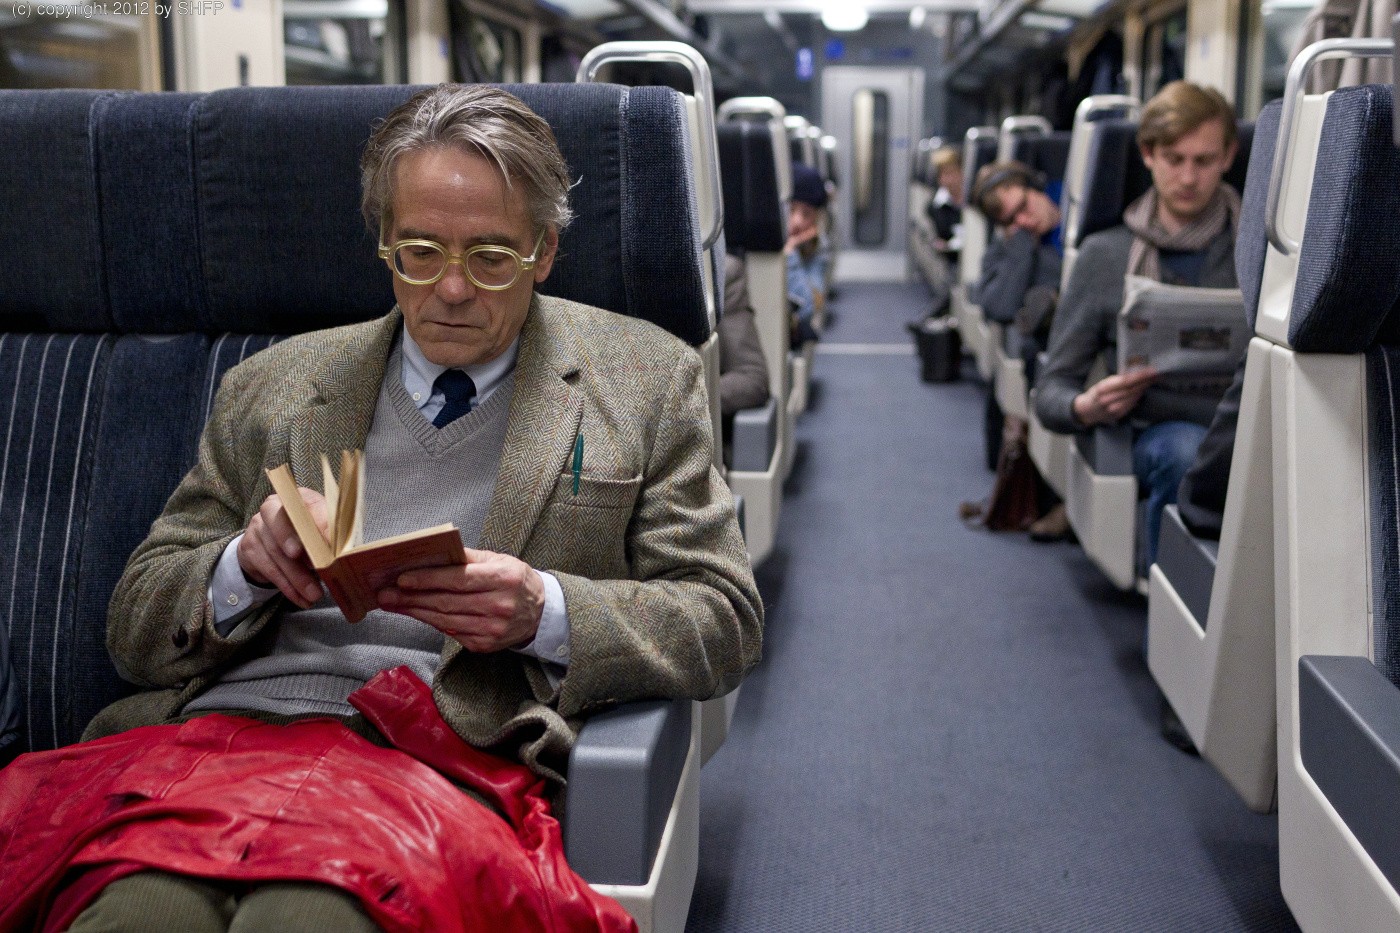 Jeremy Irons stars as Raimund Gregorius in Wrekin Hill Entertainment's Night Train to Lisbon (2013)